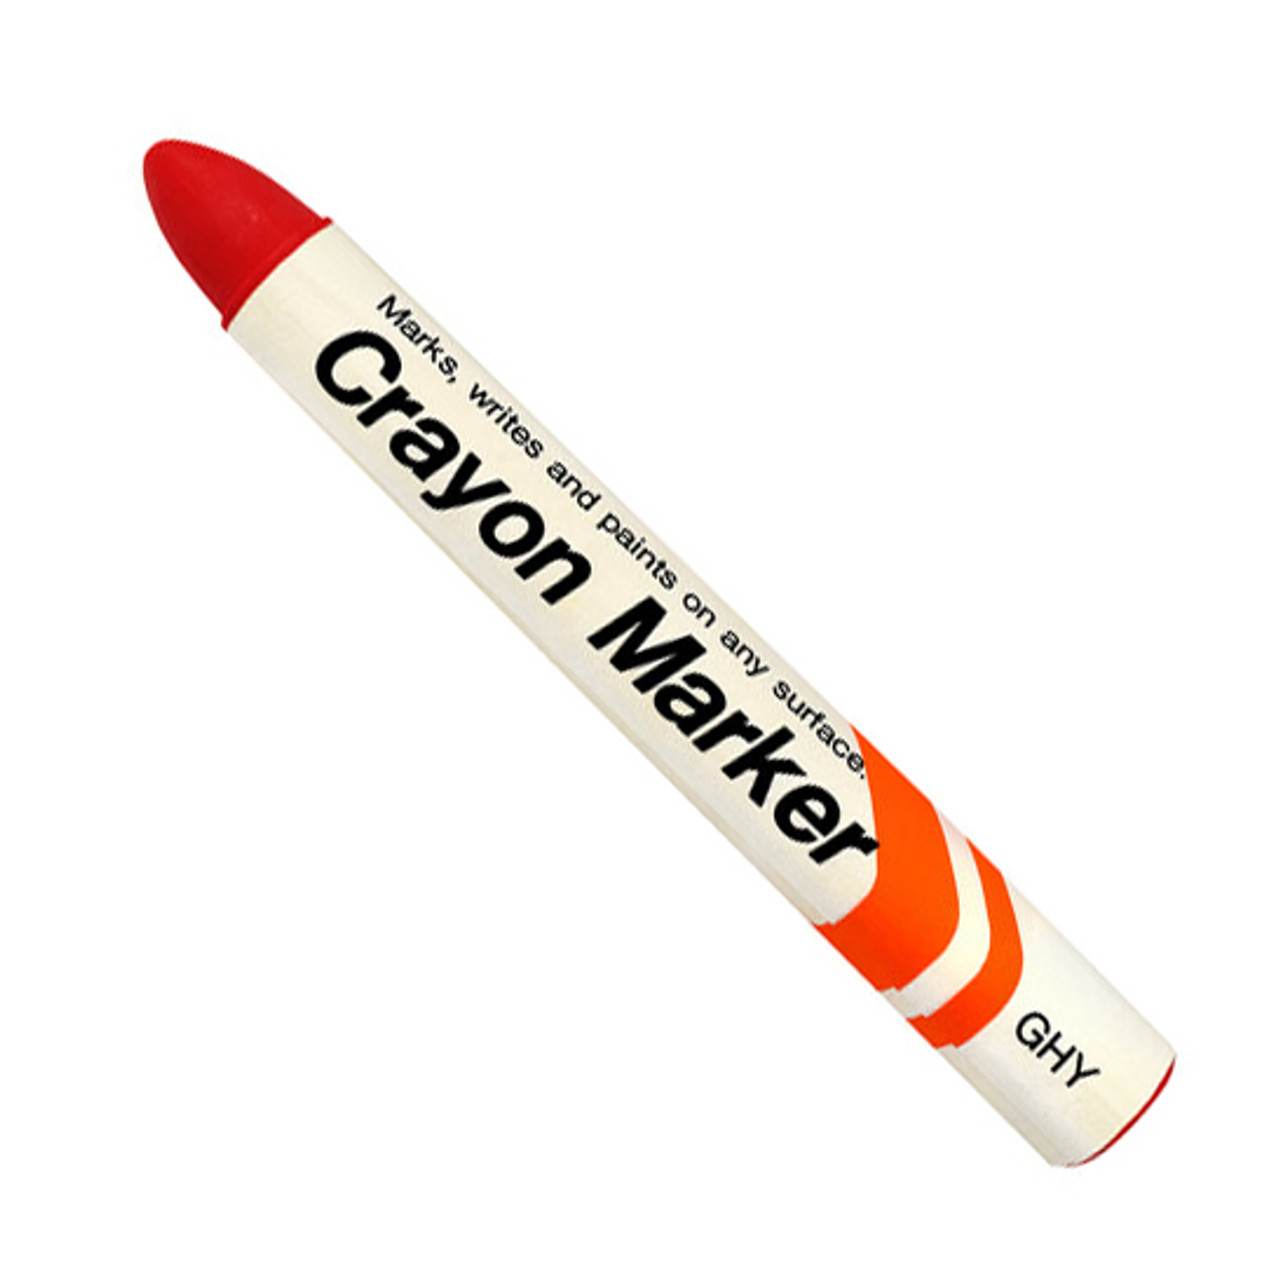 Crayola Metallic FX and Metallic Crayons: What's Inside the Box